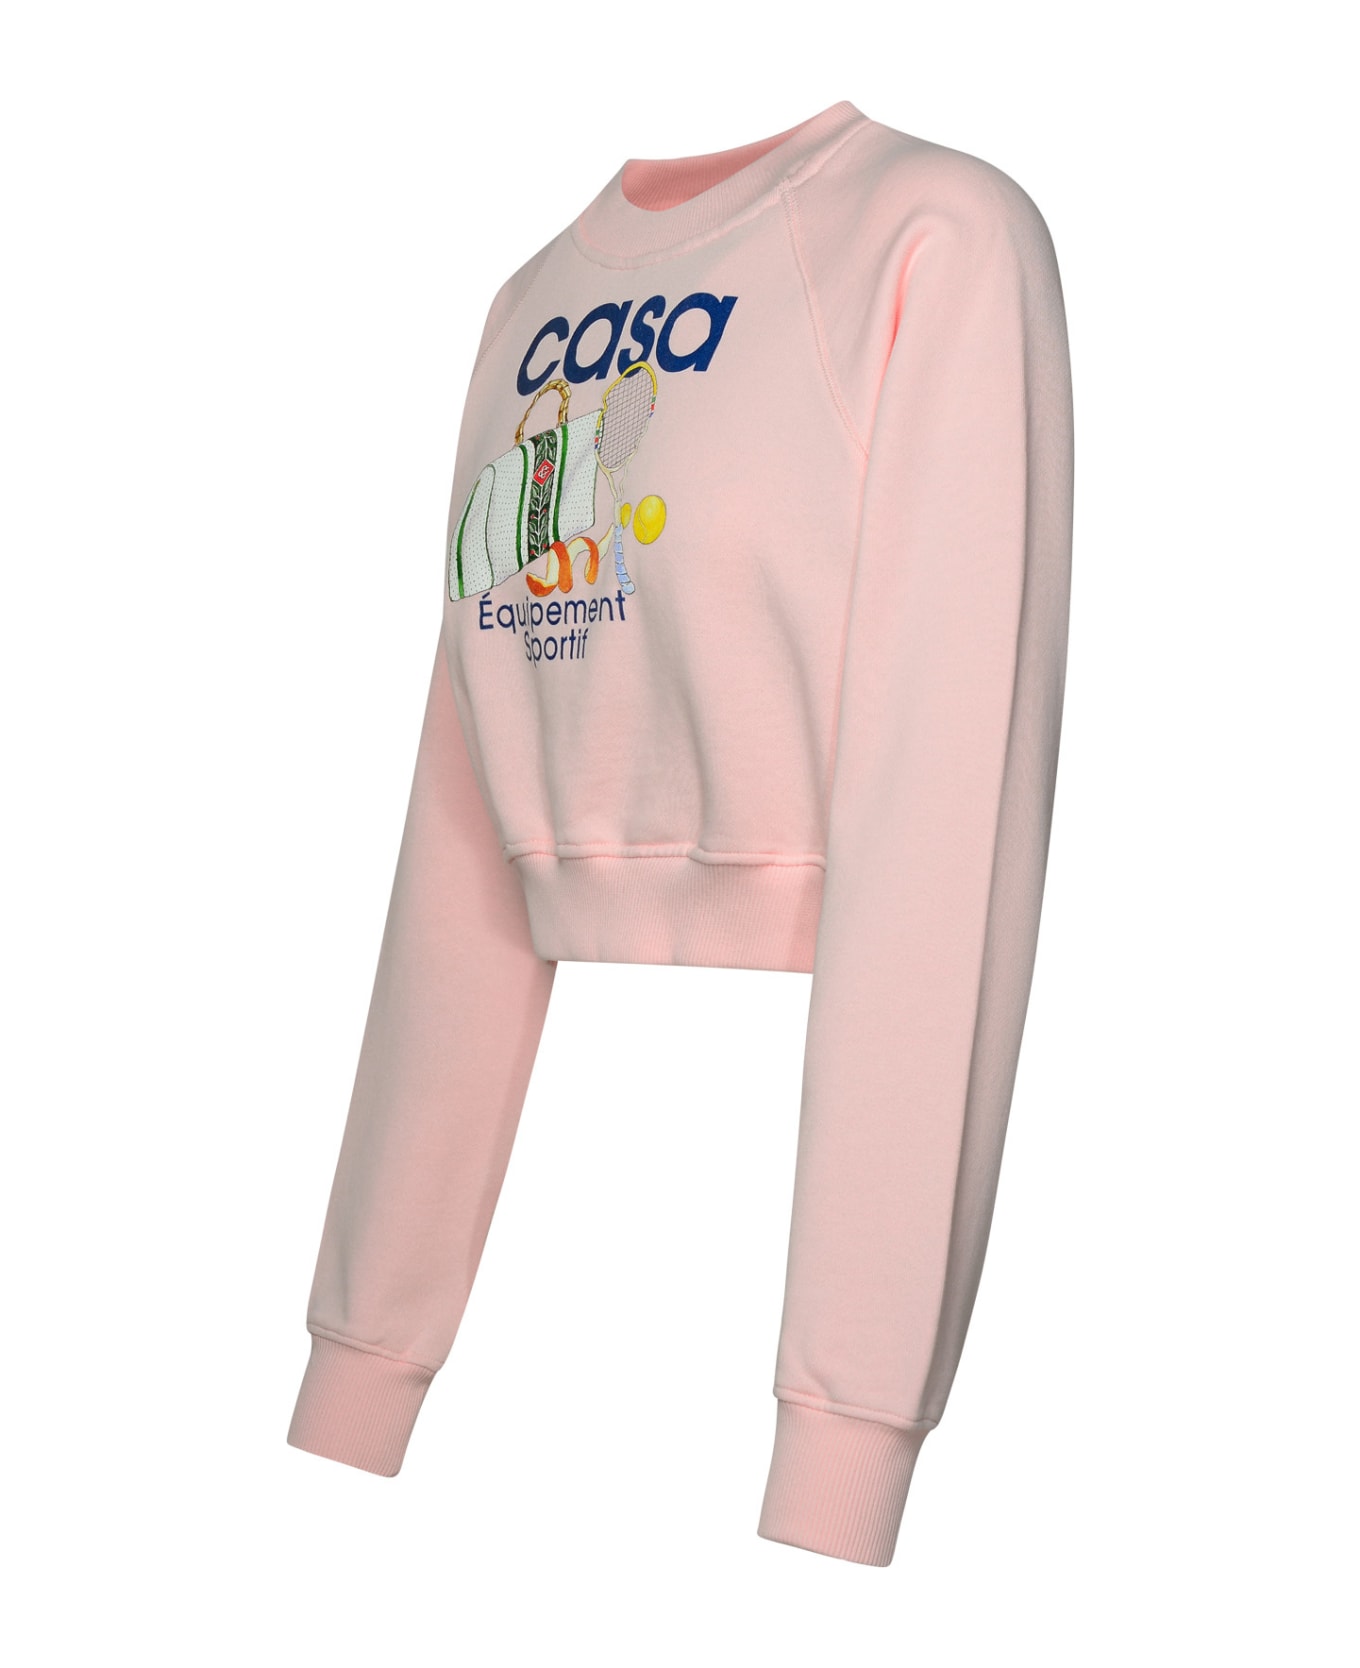 Casablanca 'equipement Sportif' Pink Organic Cotton Sweatshirt - Pink